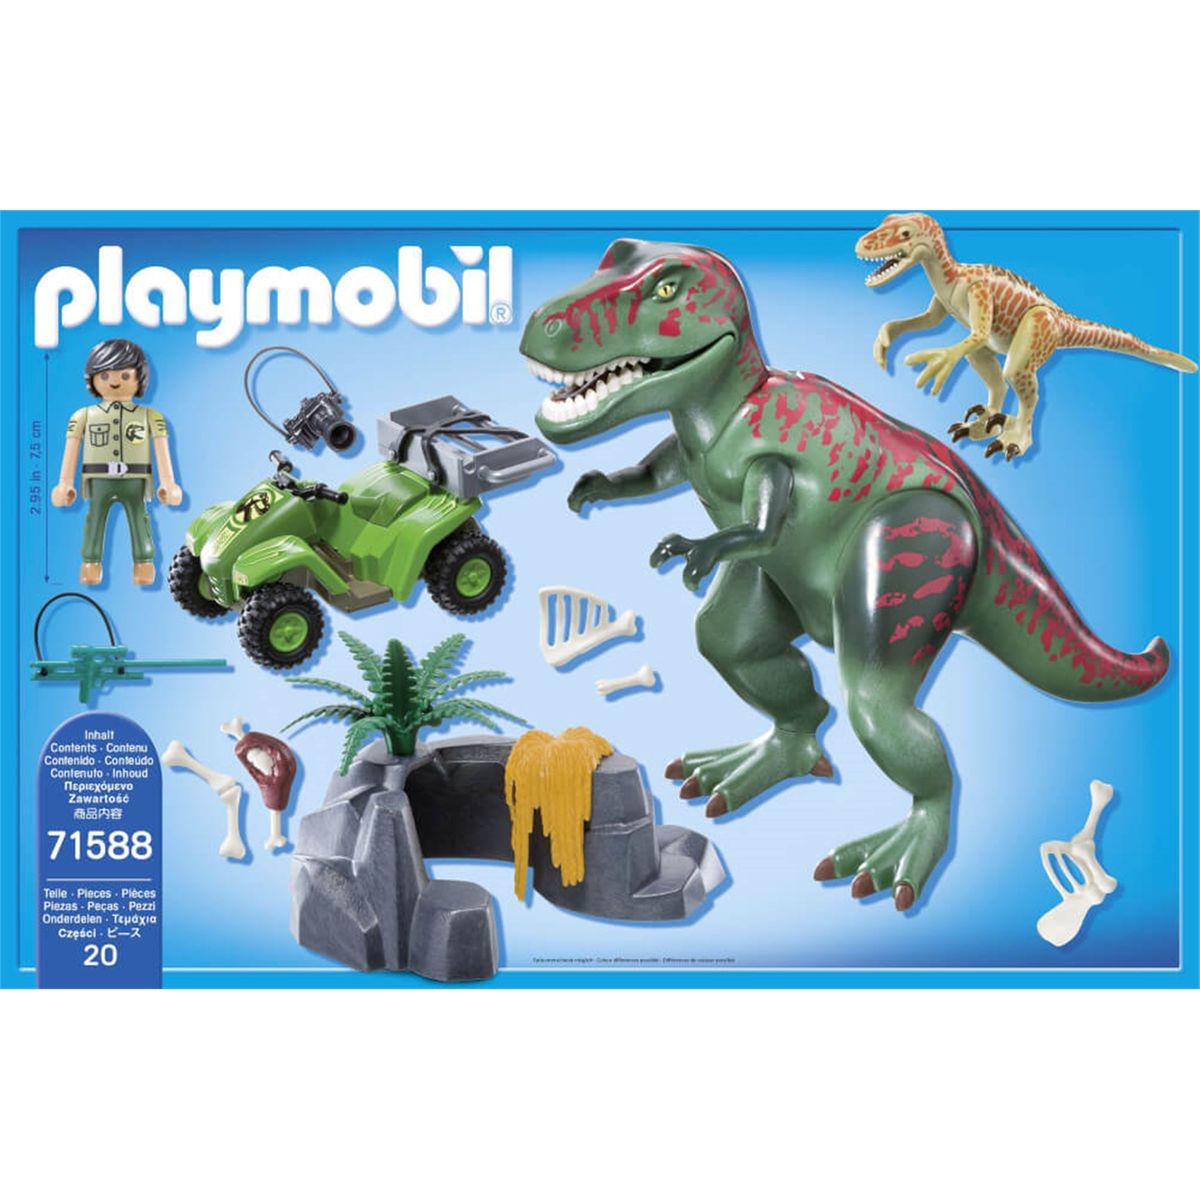 PLAYMOBIL, Il faut aider les dinosaures!